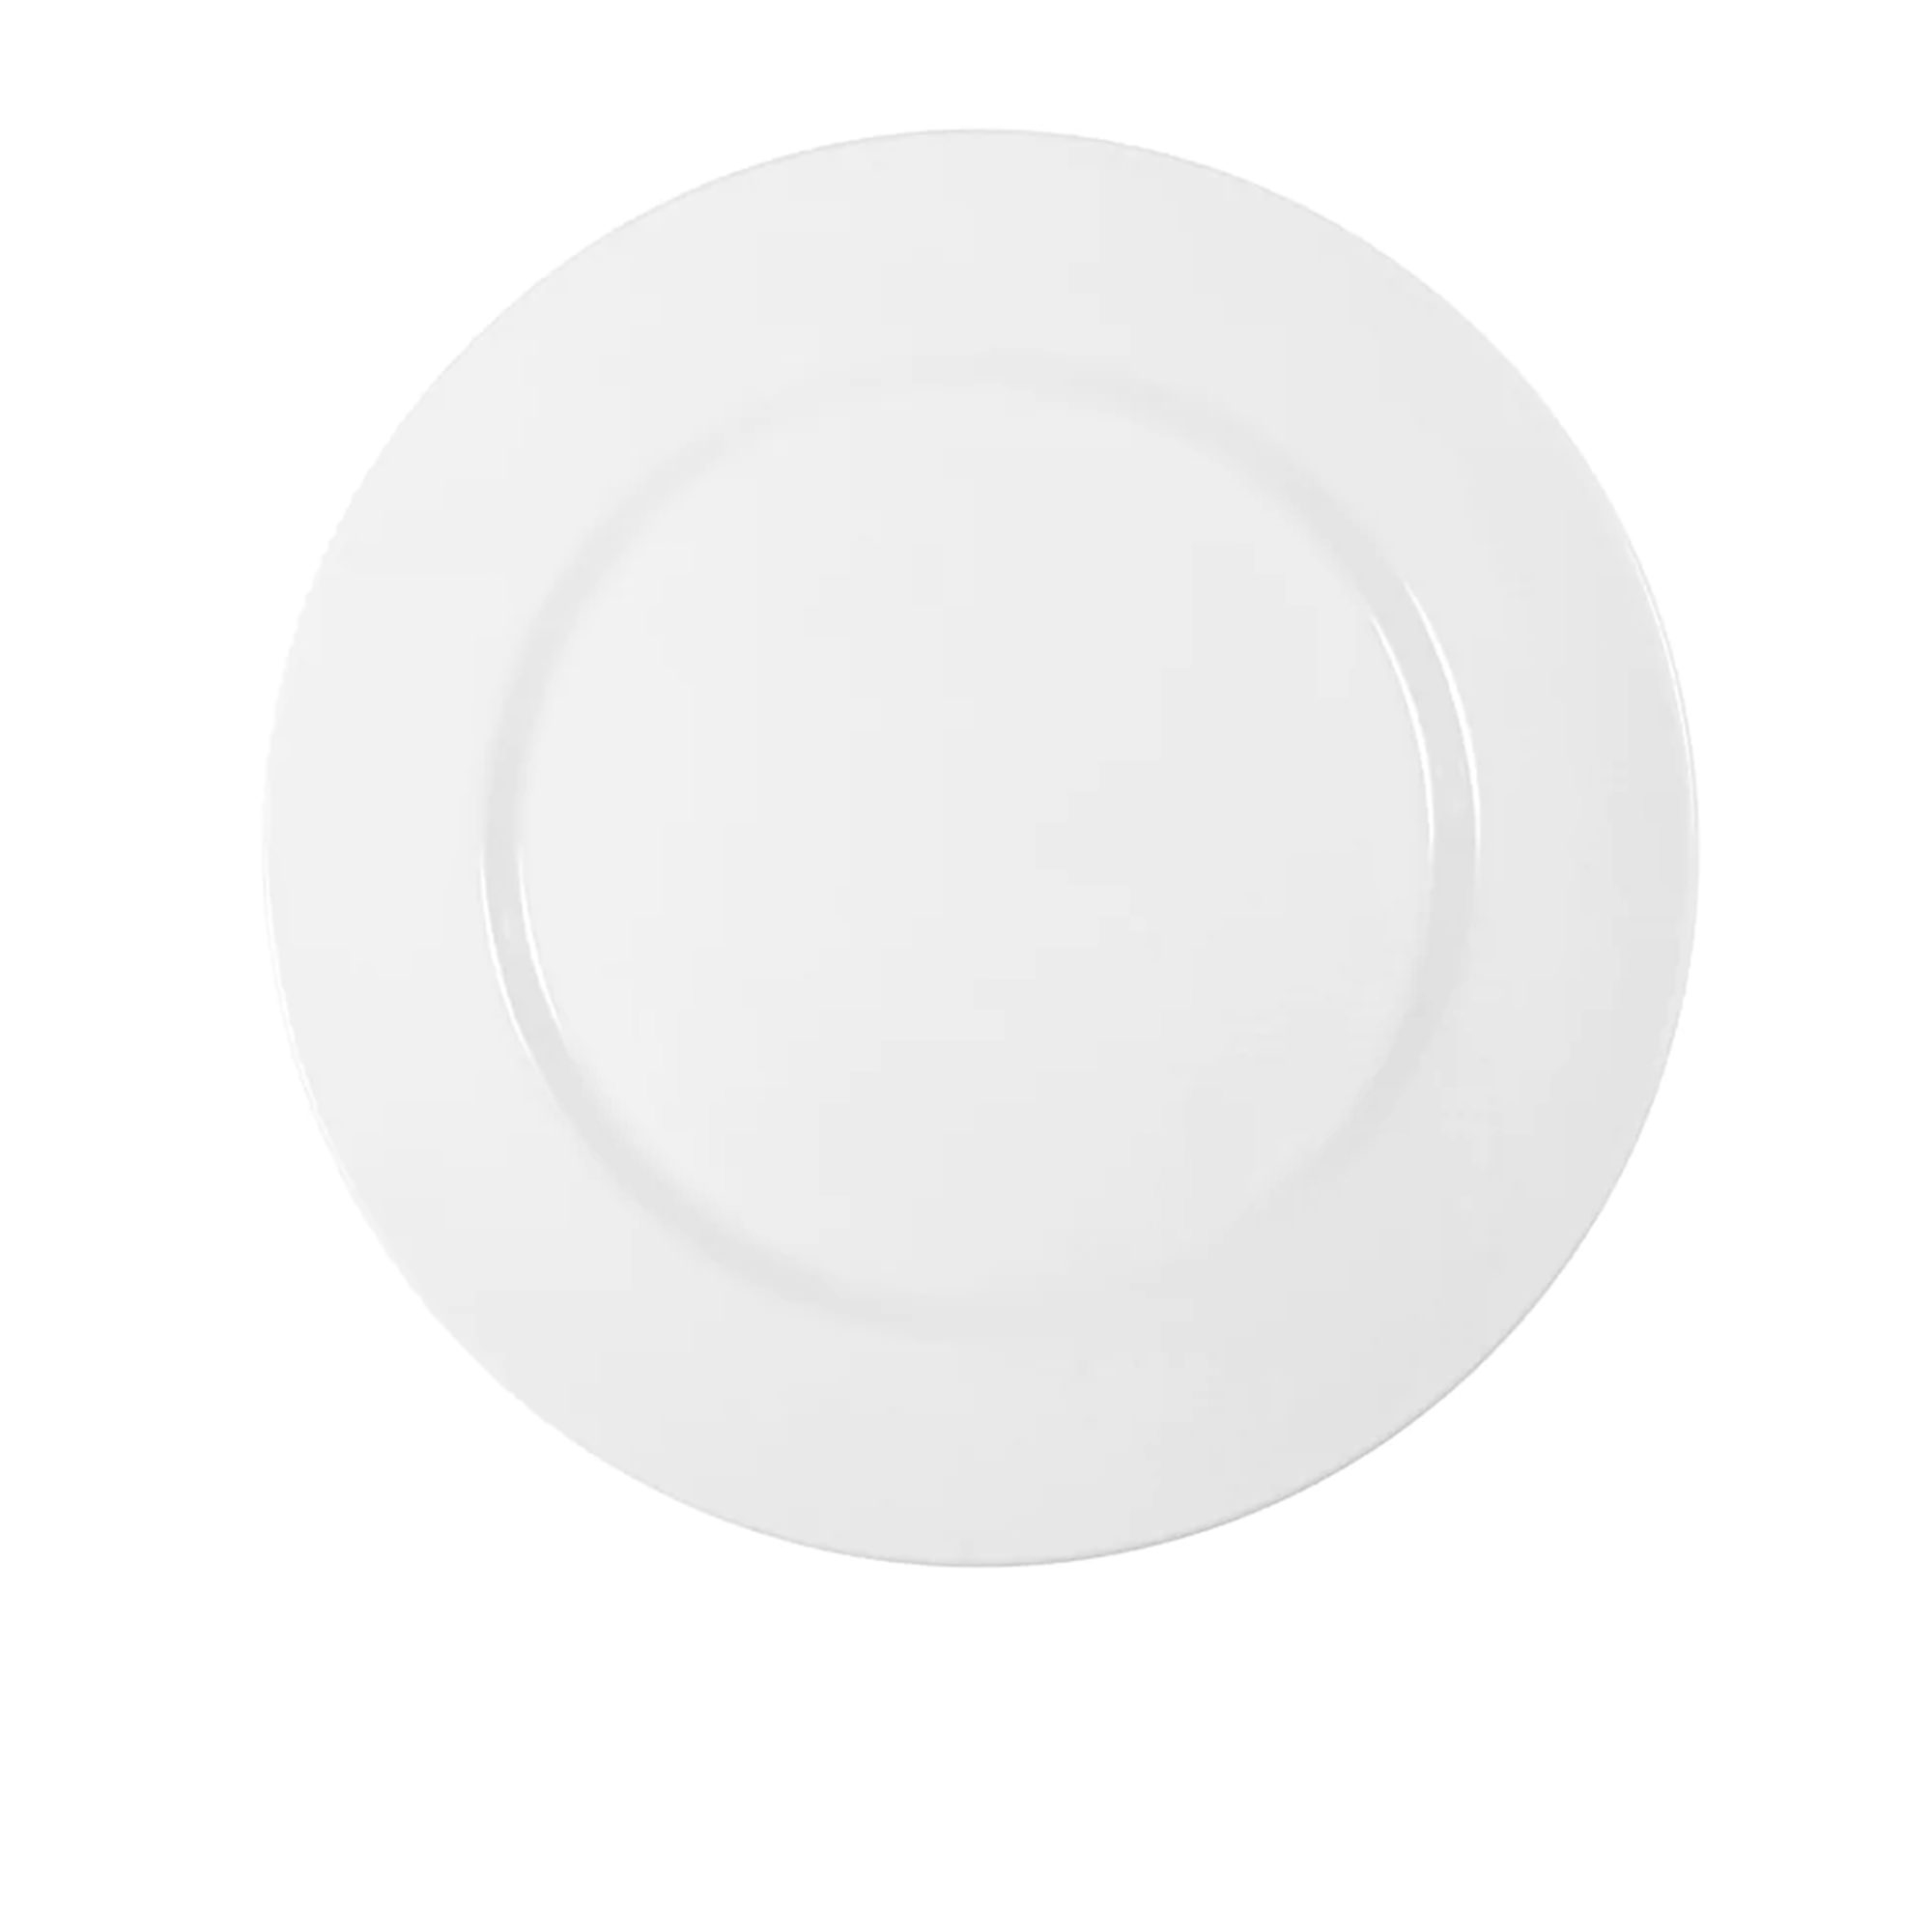 Superware Melamine Round Plate 25cm White Image 1